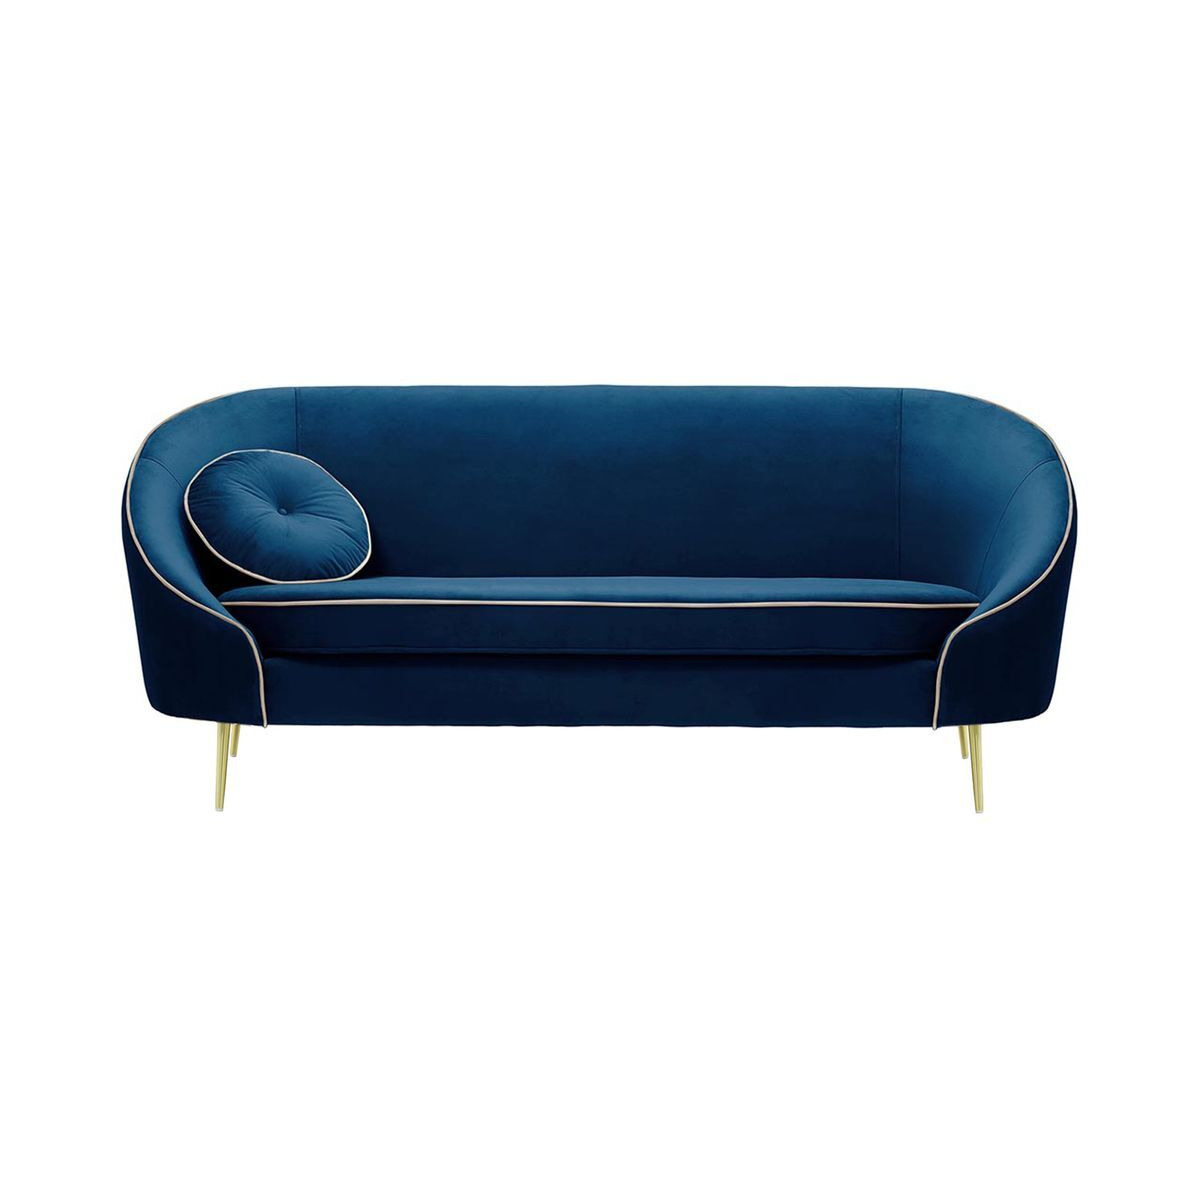 Kooper 3 Seater Sofa, blue, Leg colour: gold metal - image 1